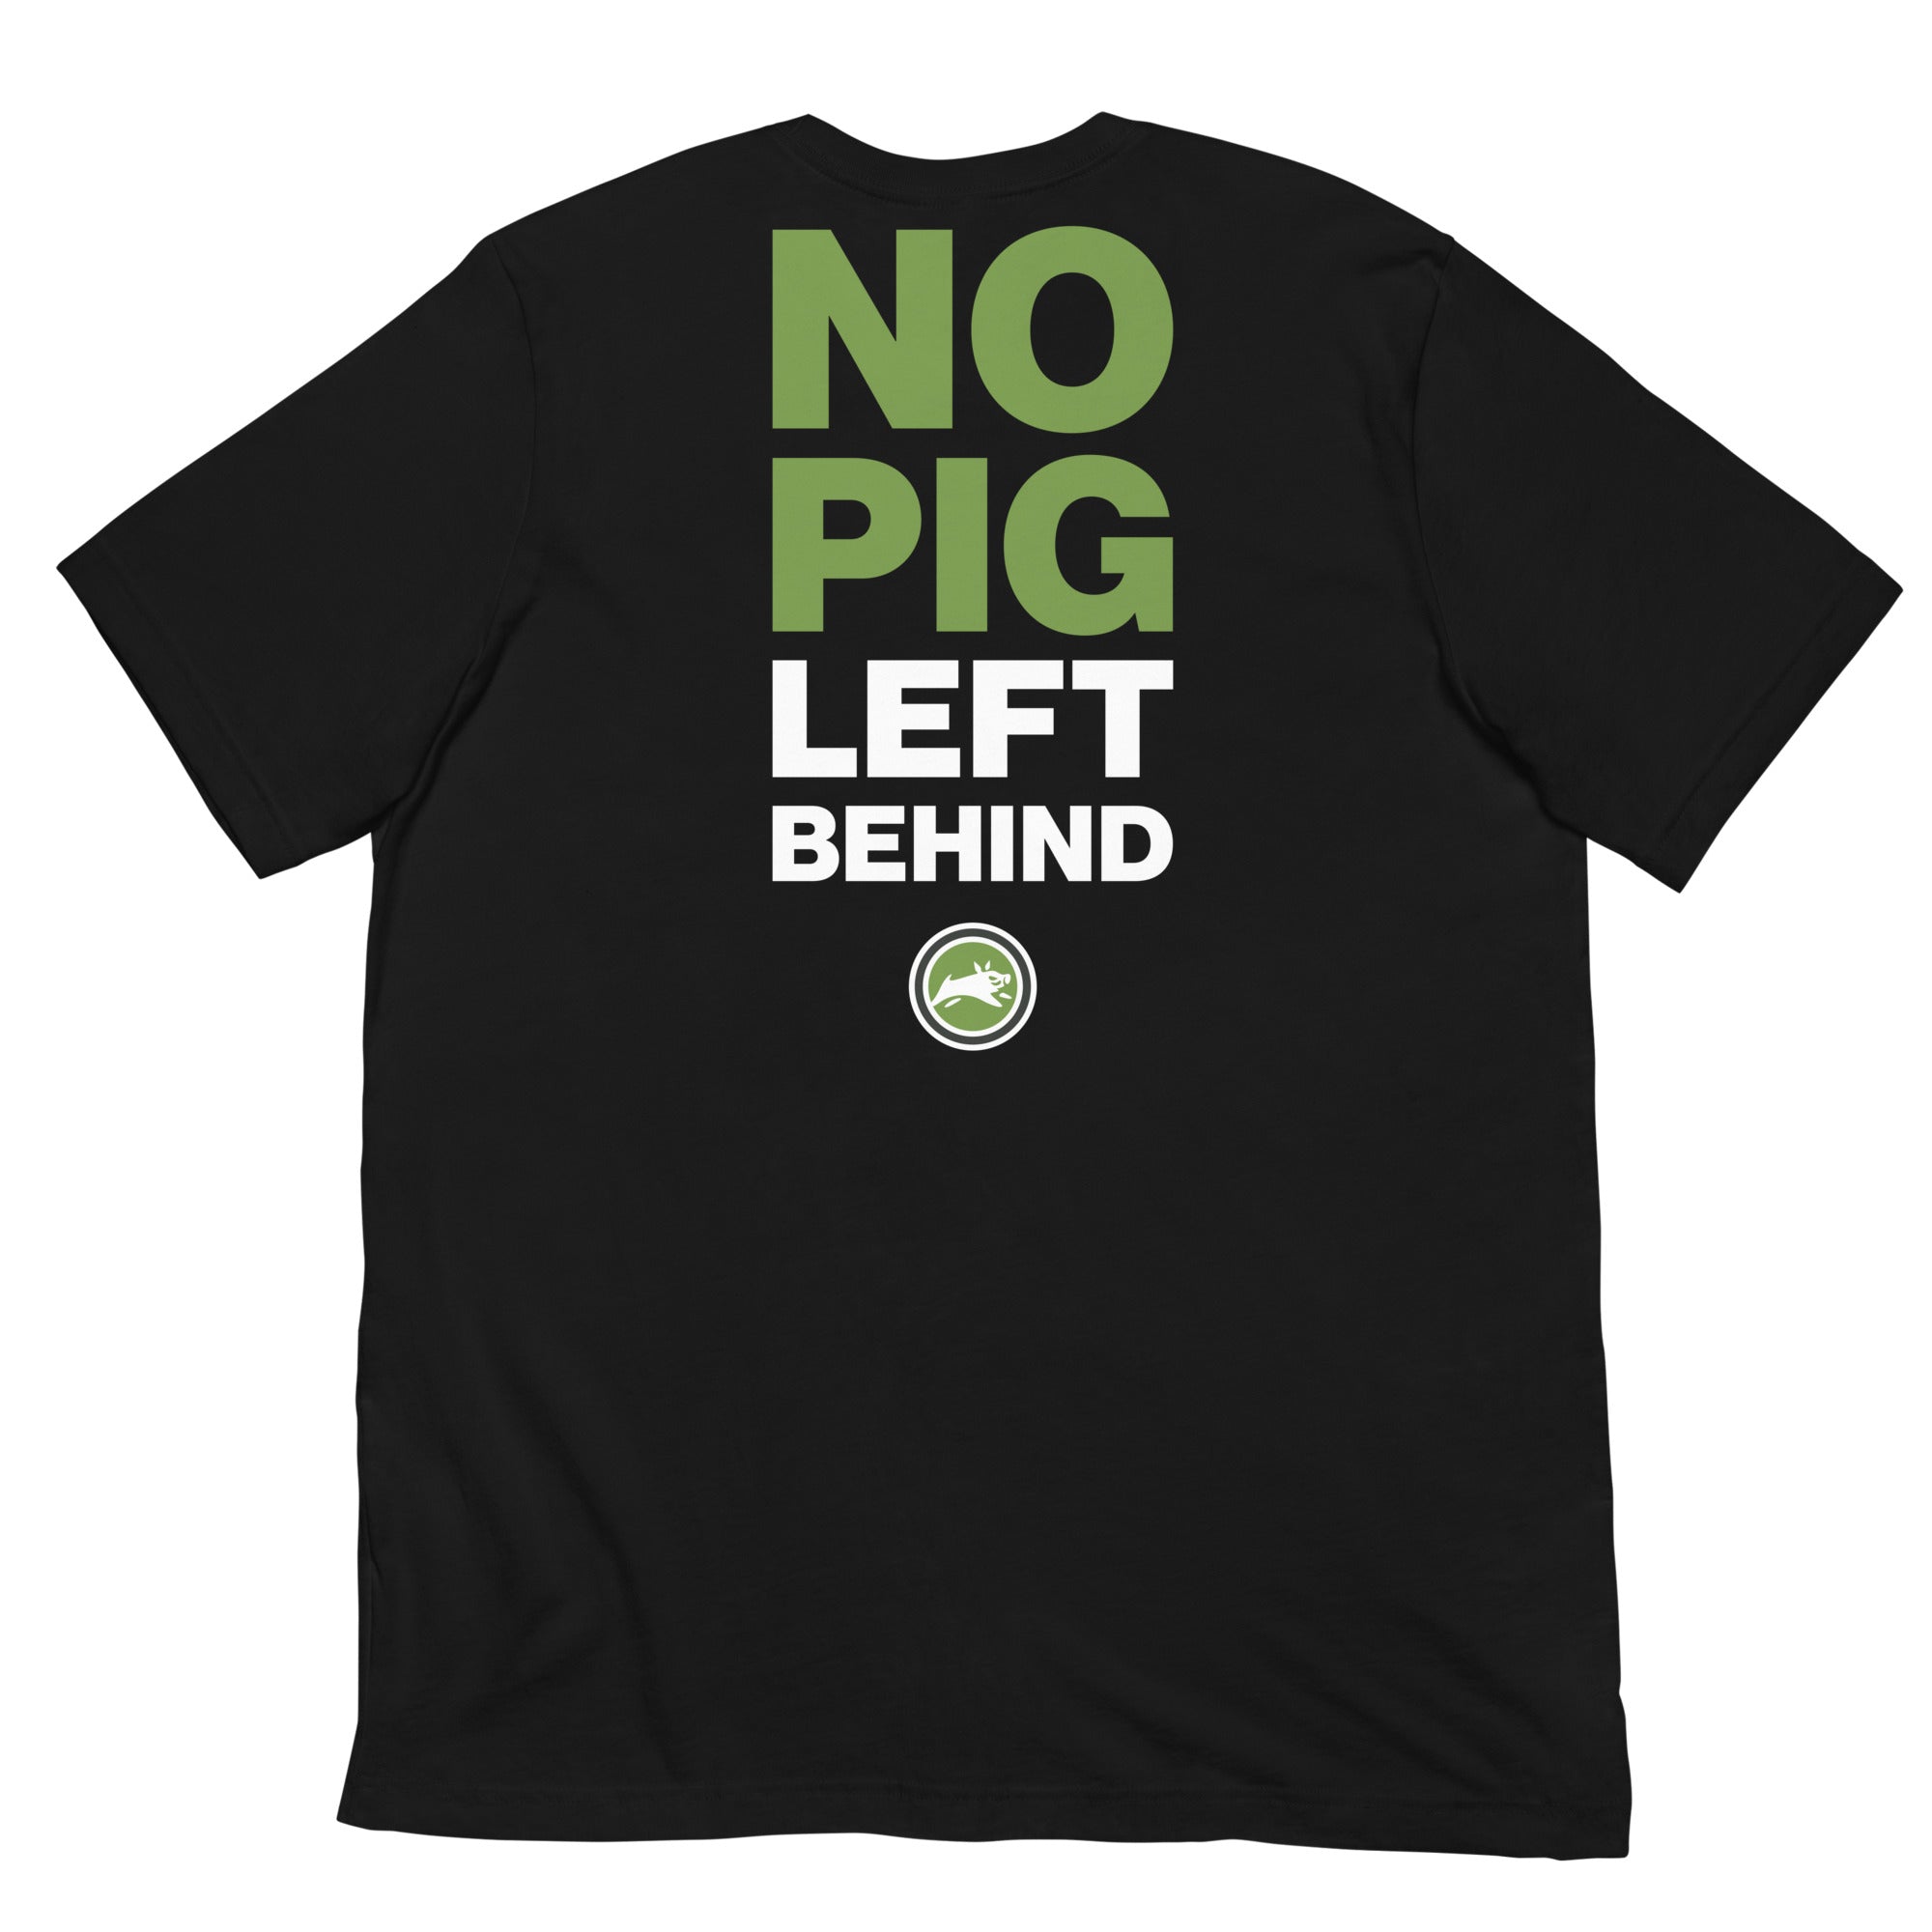 No Pig Left Behind. - Short-Sleeve Unisex T-Shirt